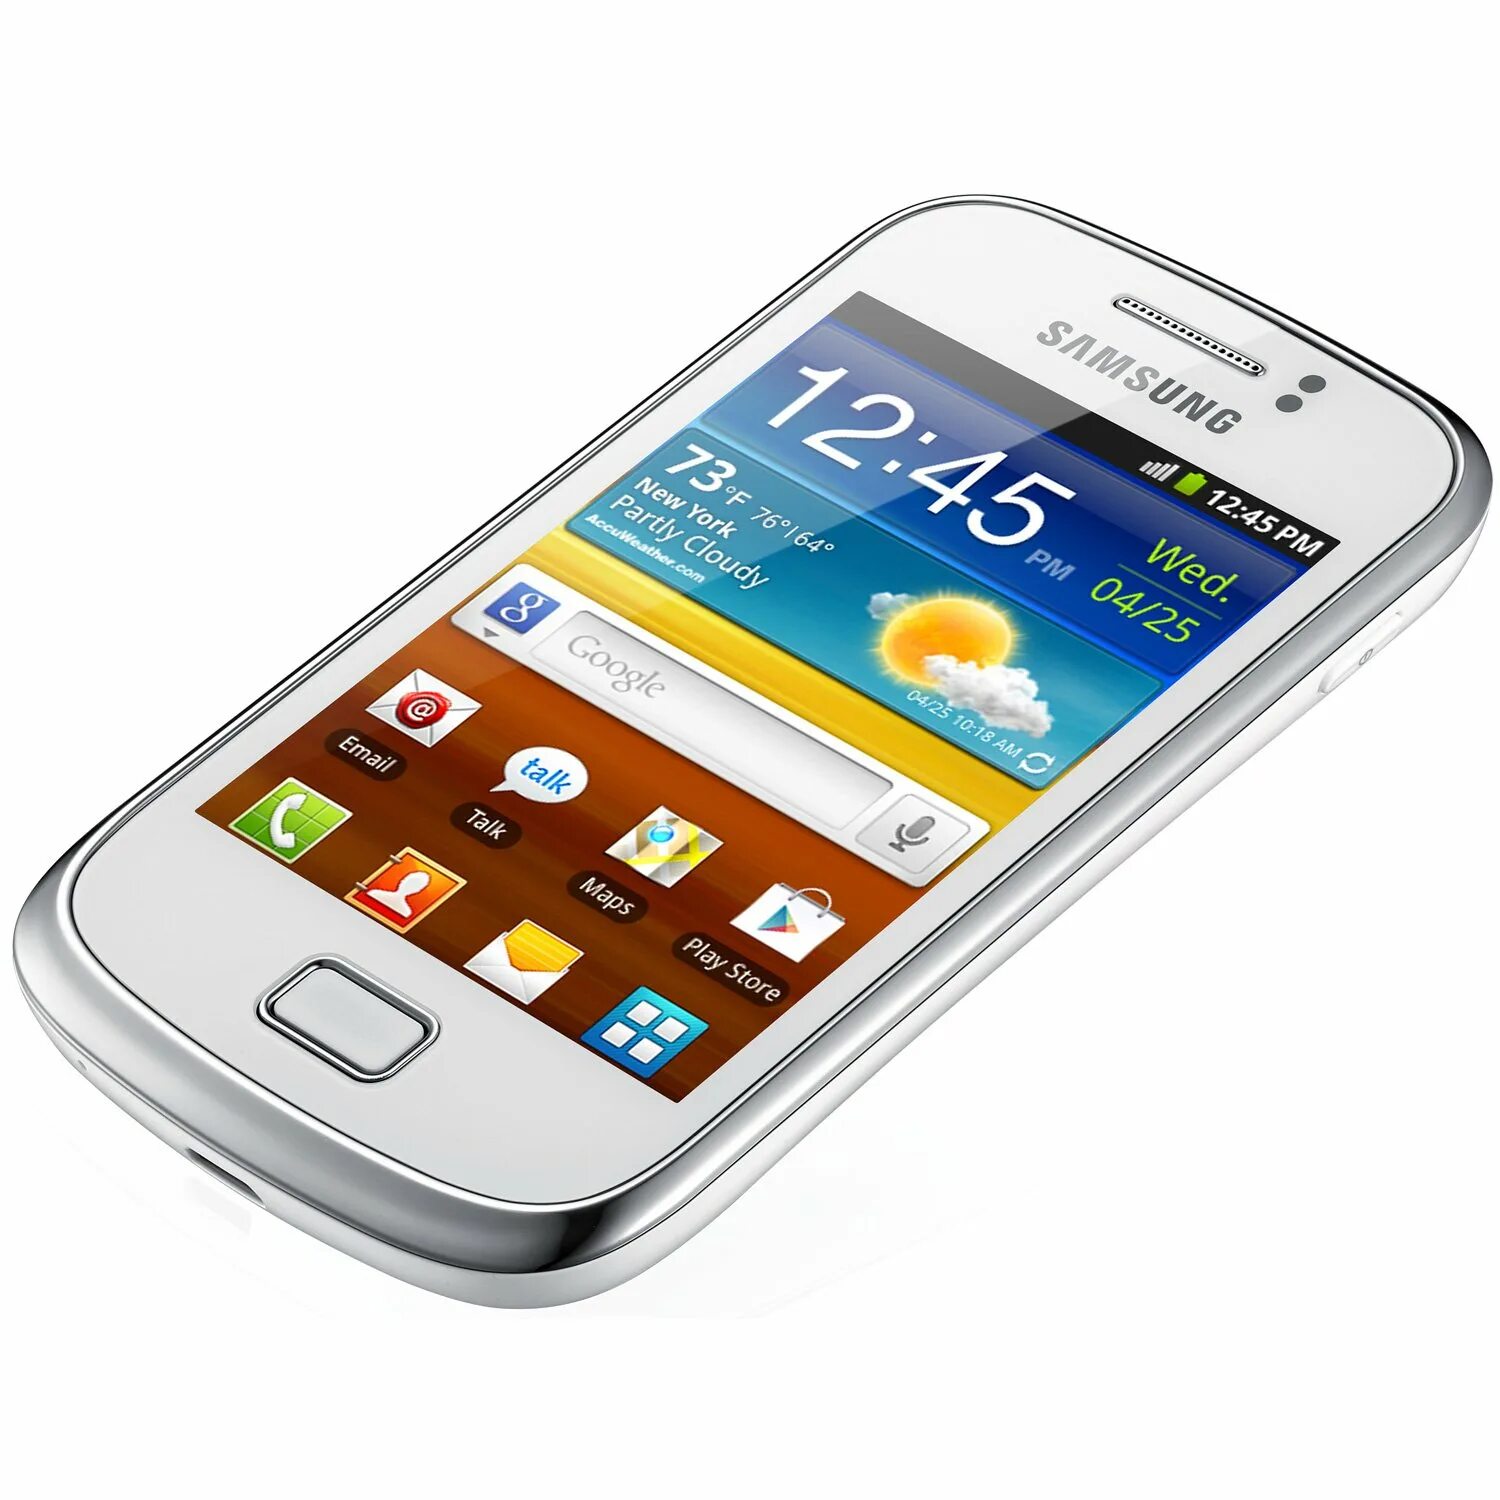 Телефона samsung galaxy mini. Samsung Galaxy s2 Mini. Самсунг галакси мини 2. Gt-s6500. Самсунг с6500 галакси мини.